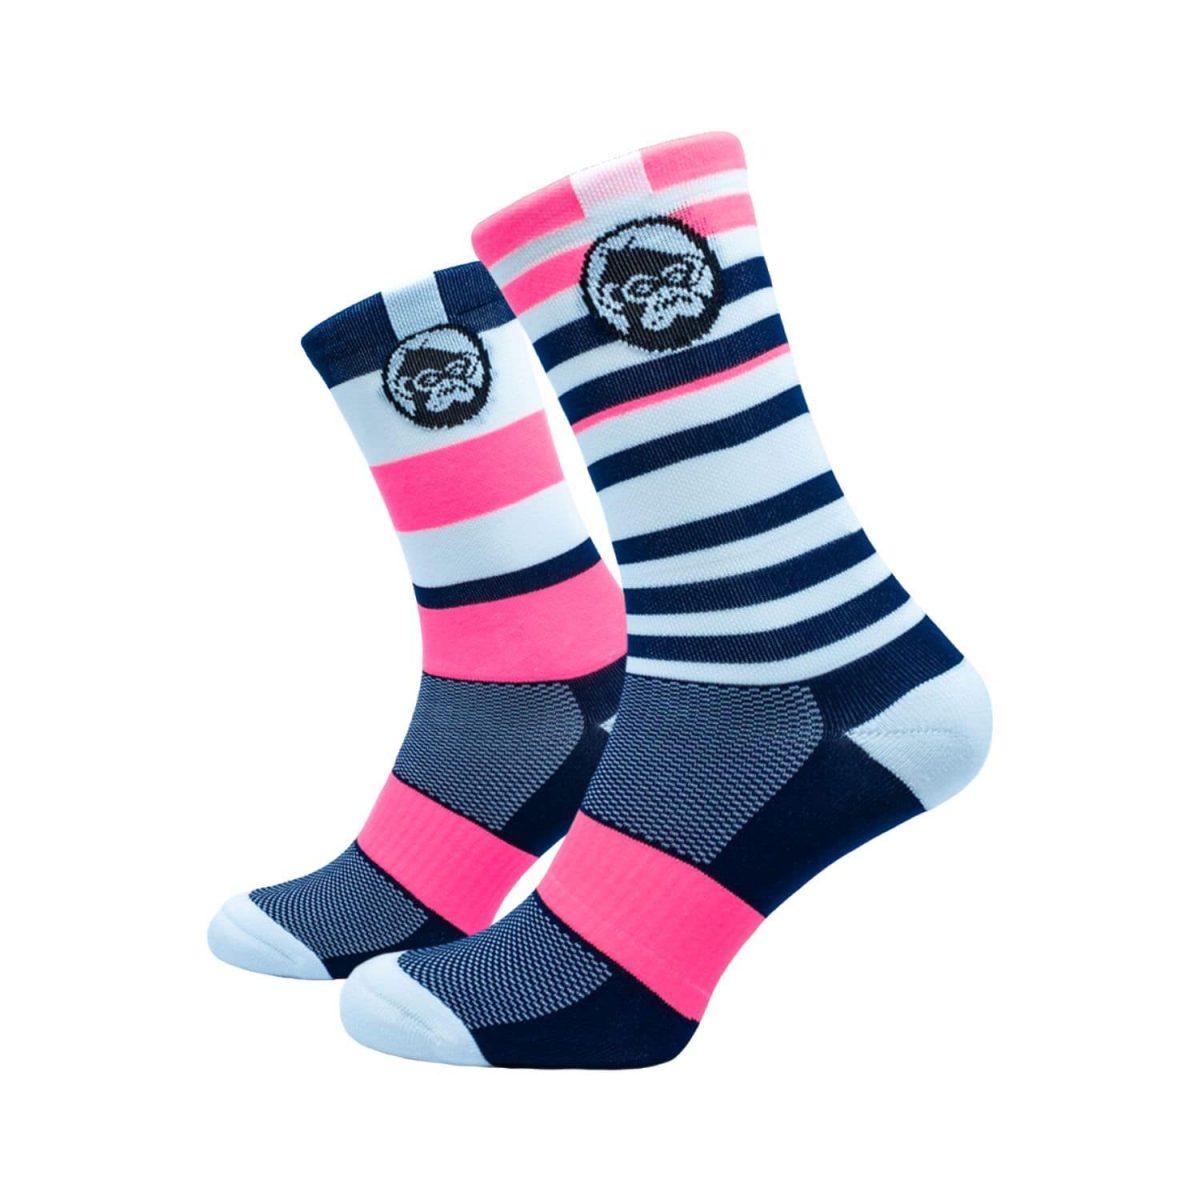 GRUMPY MONKEY - Knitted Socks (Sailor)